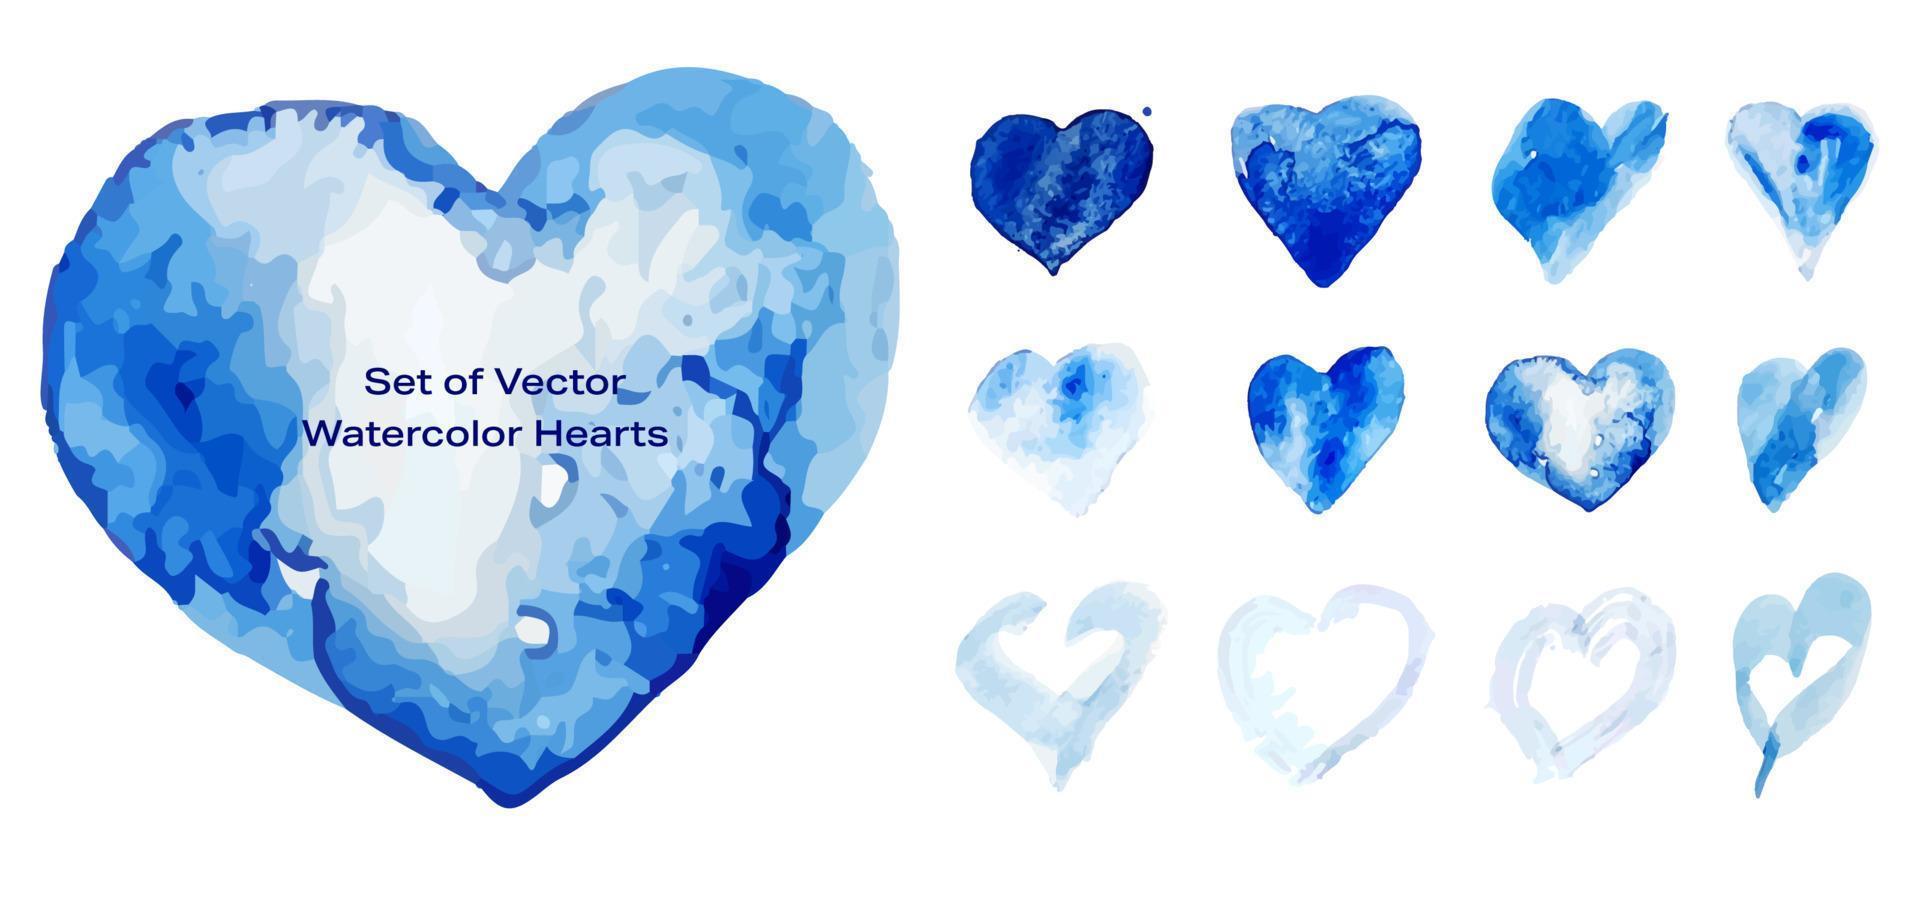 Set of Decorative Vector Watercolor Hearts in Blue Colors